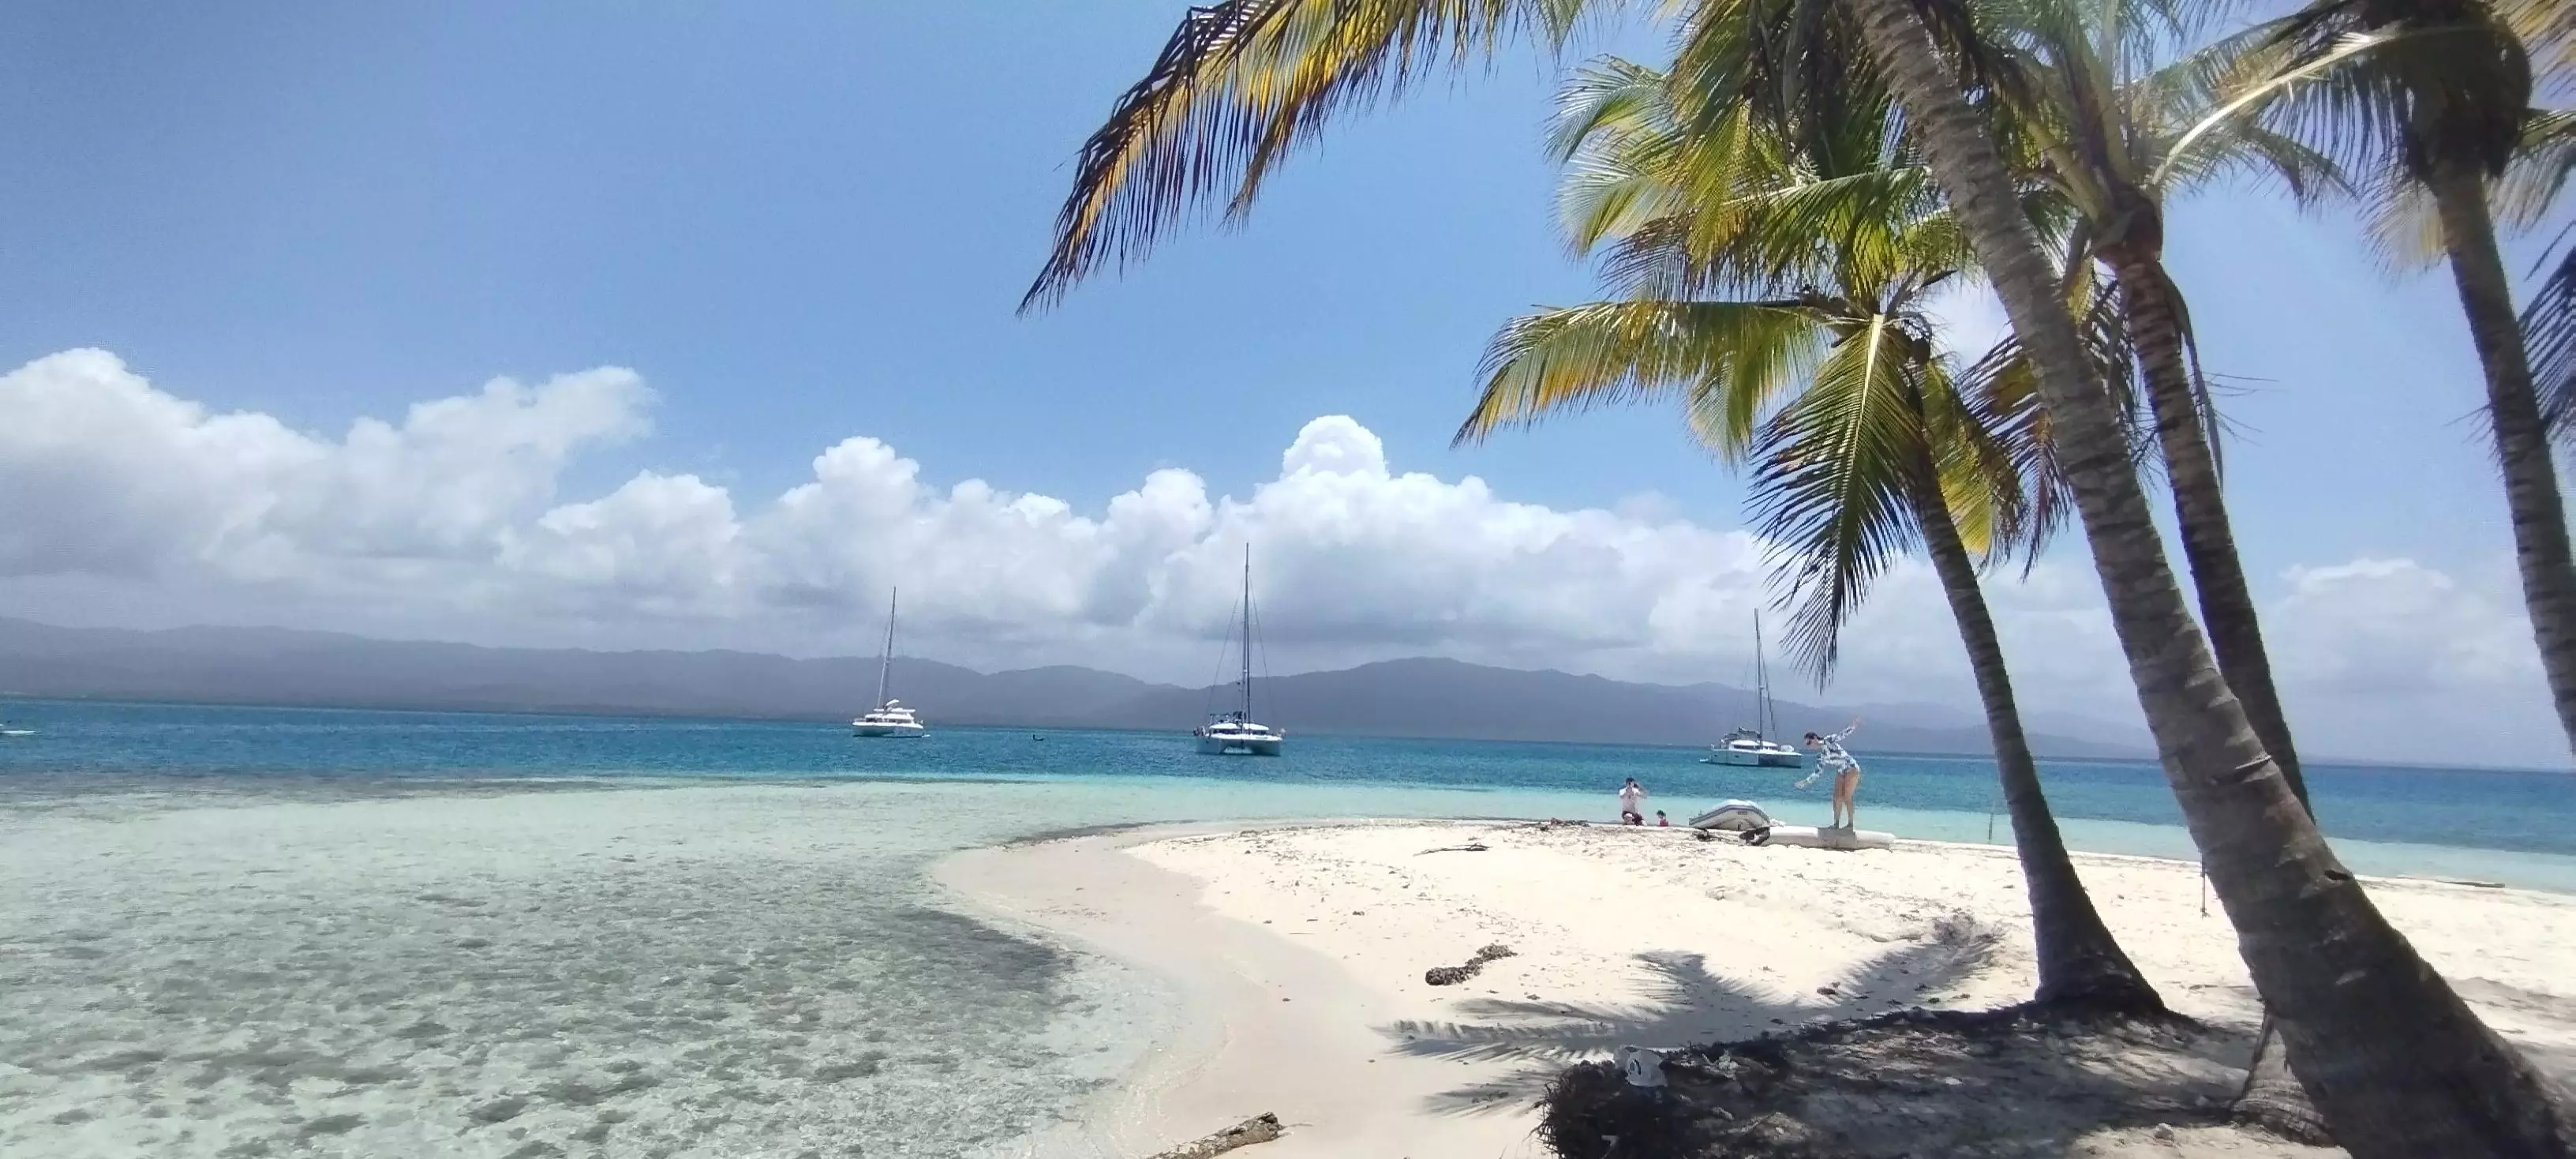 Острова Сан-Блас Панама Карибский бассейн, Туристическое направление Панама, Путешествие в Панаму, Отпуск в Панаме